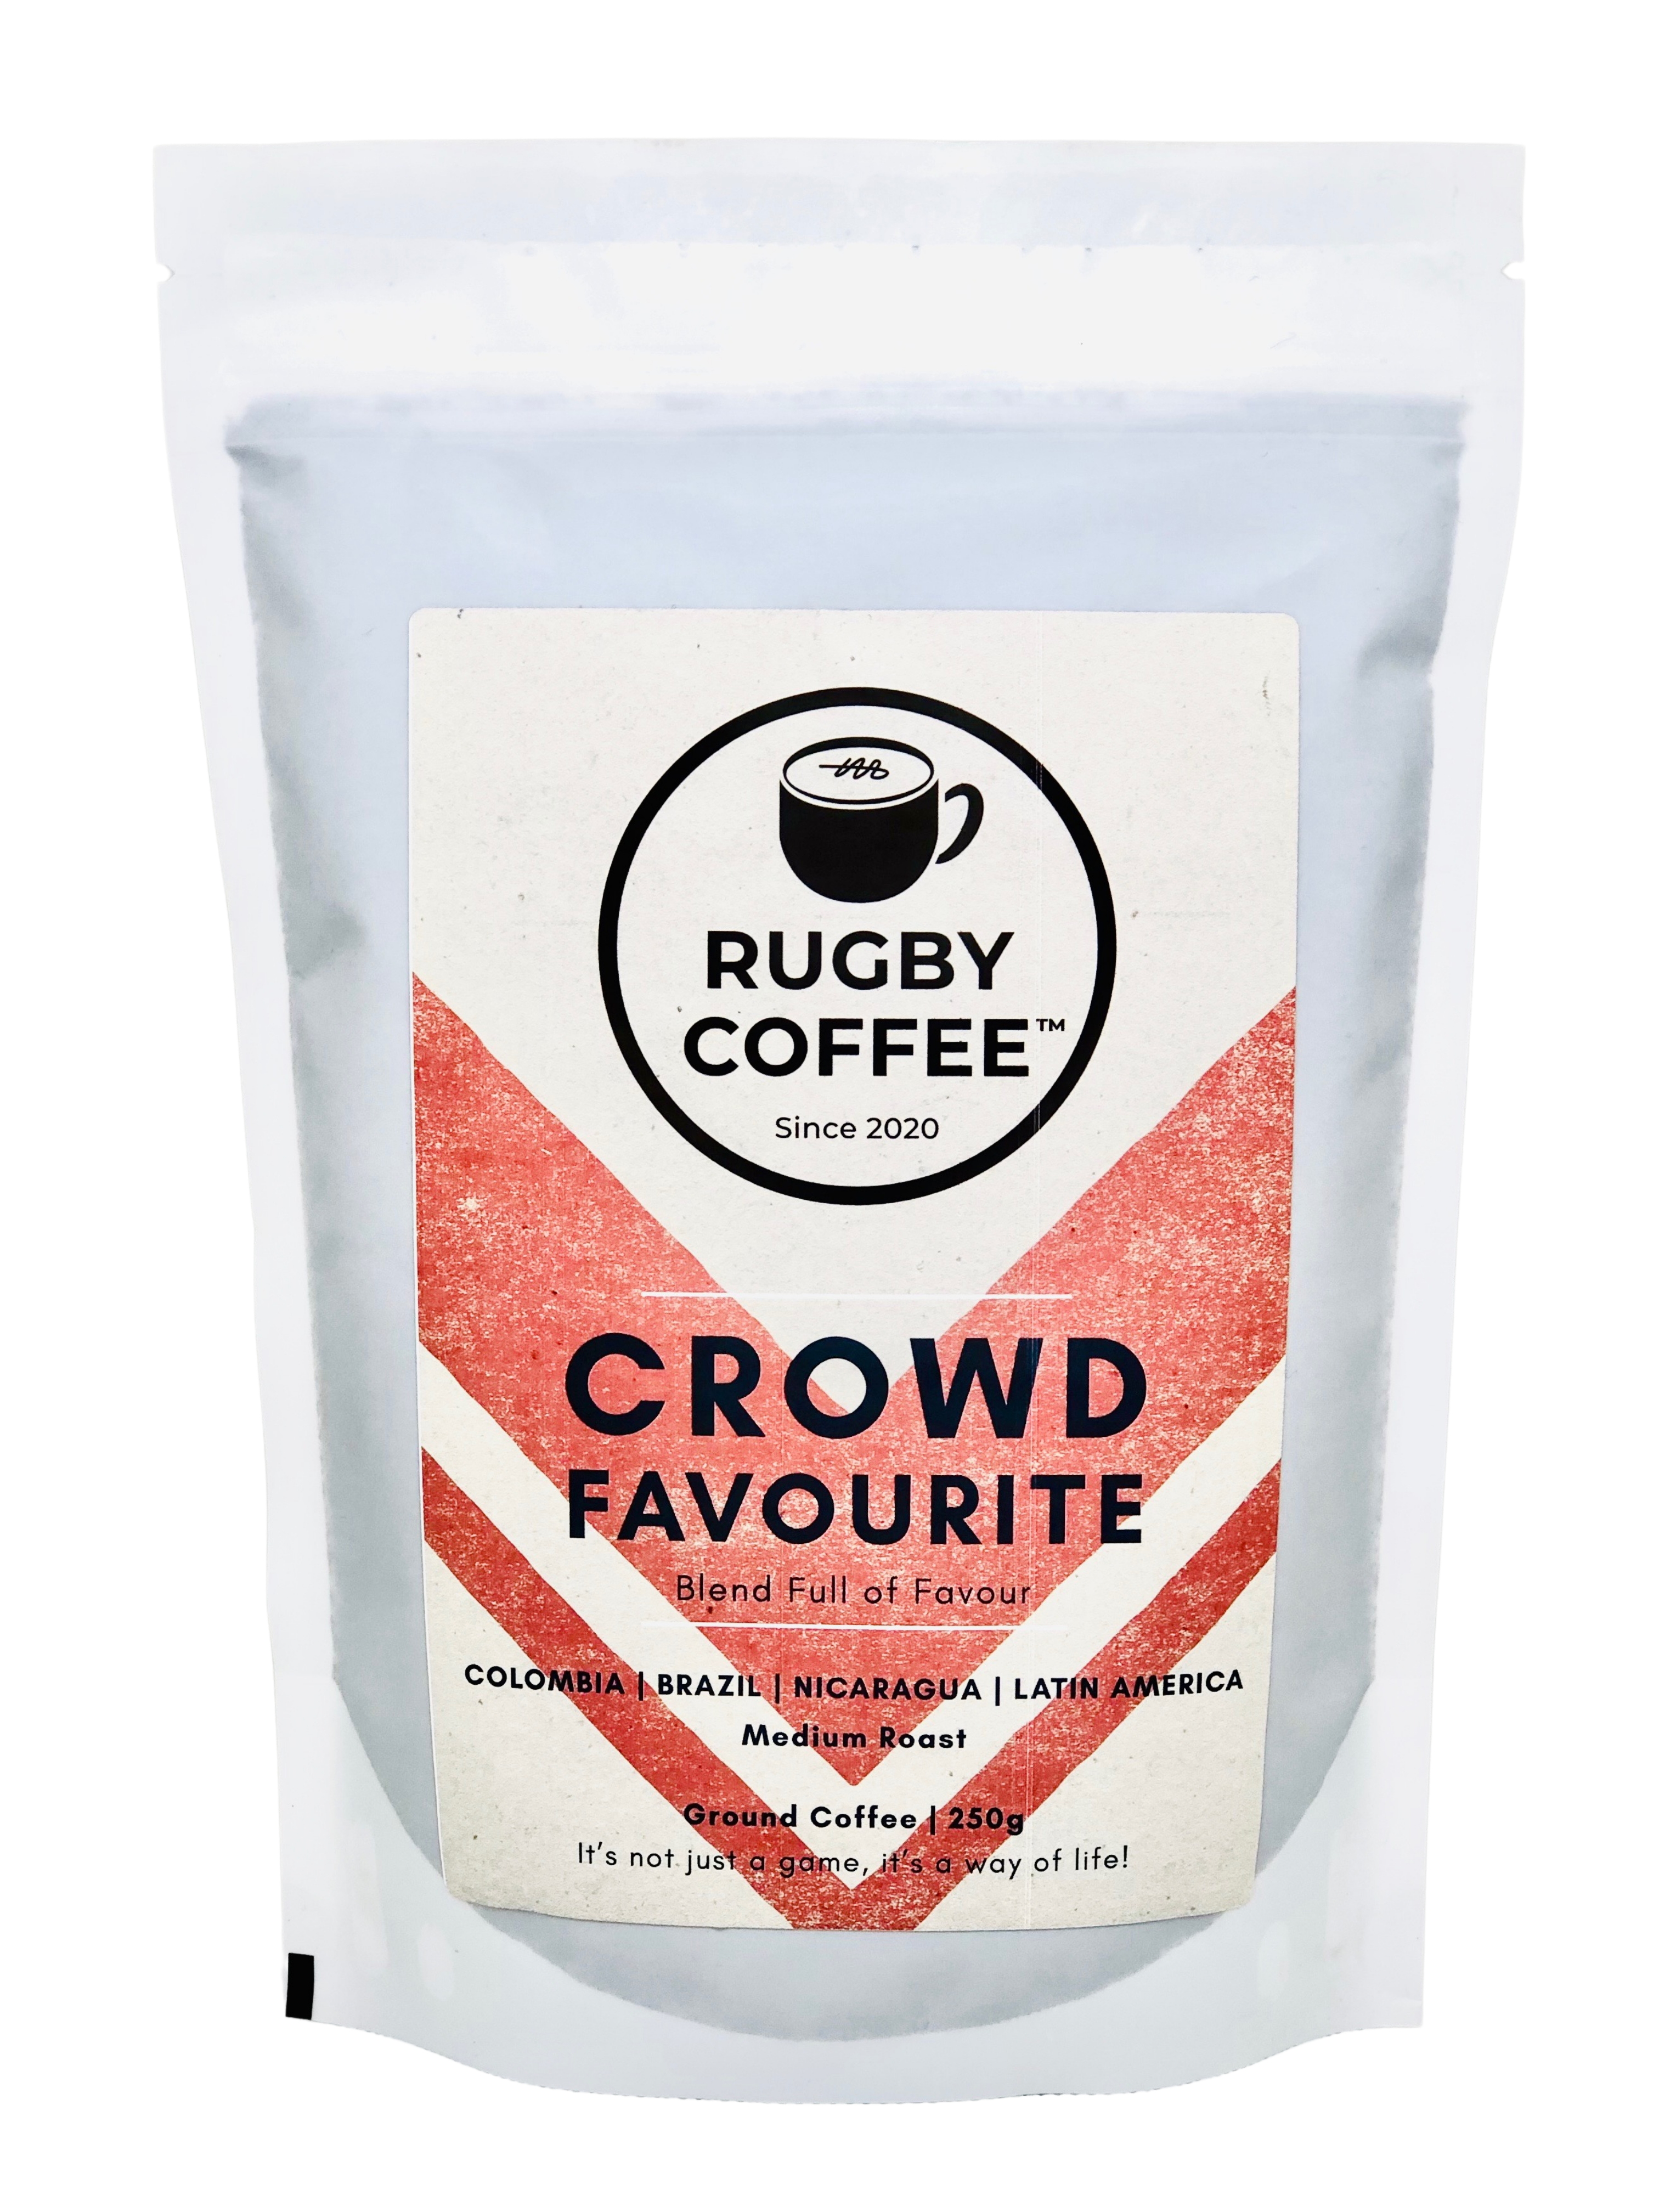 CROWD FAVOURITE 250g Ground Coffee